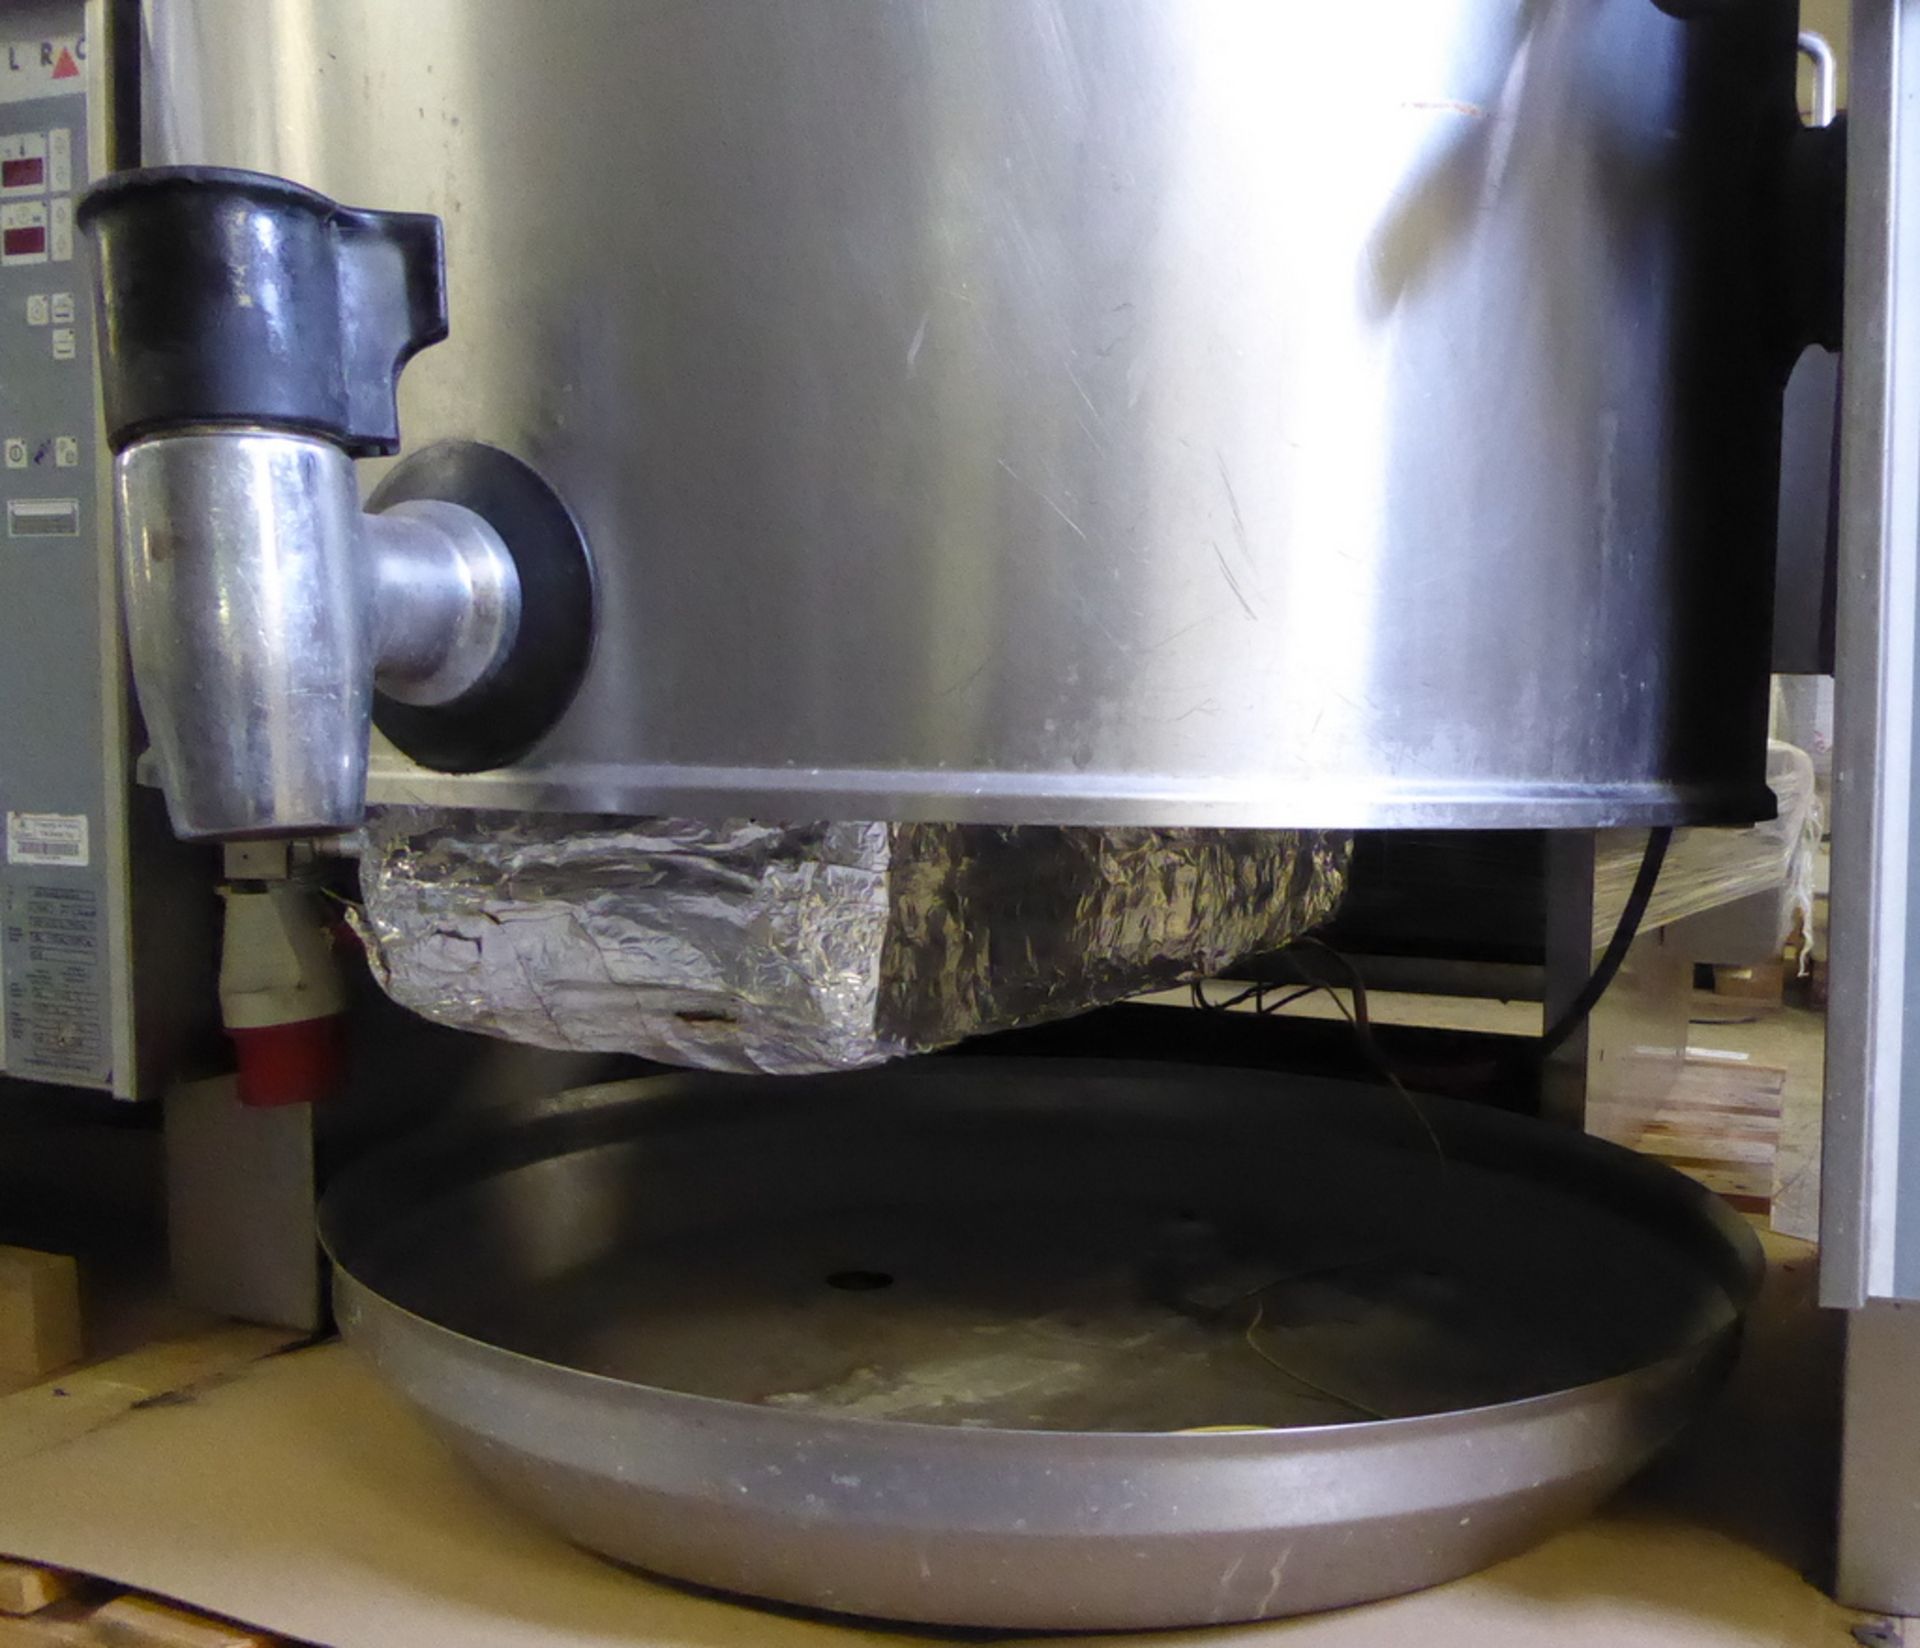 Elro JK3-200 Tilting kettle / Bratt Pan 221LTR, 32A 3 Phase, 130 x 110 x 90cm (WxDxH) - Image 2 of 7